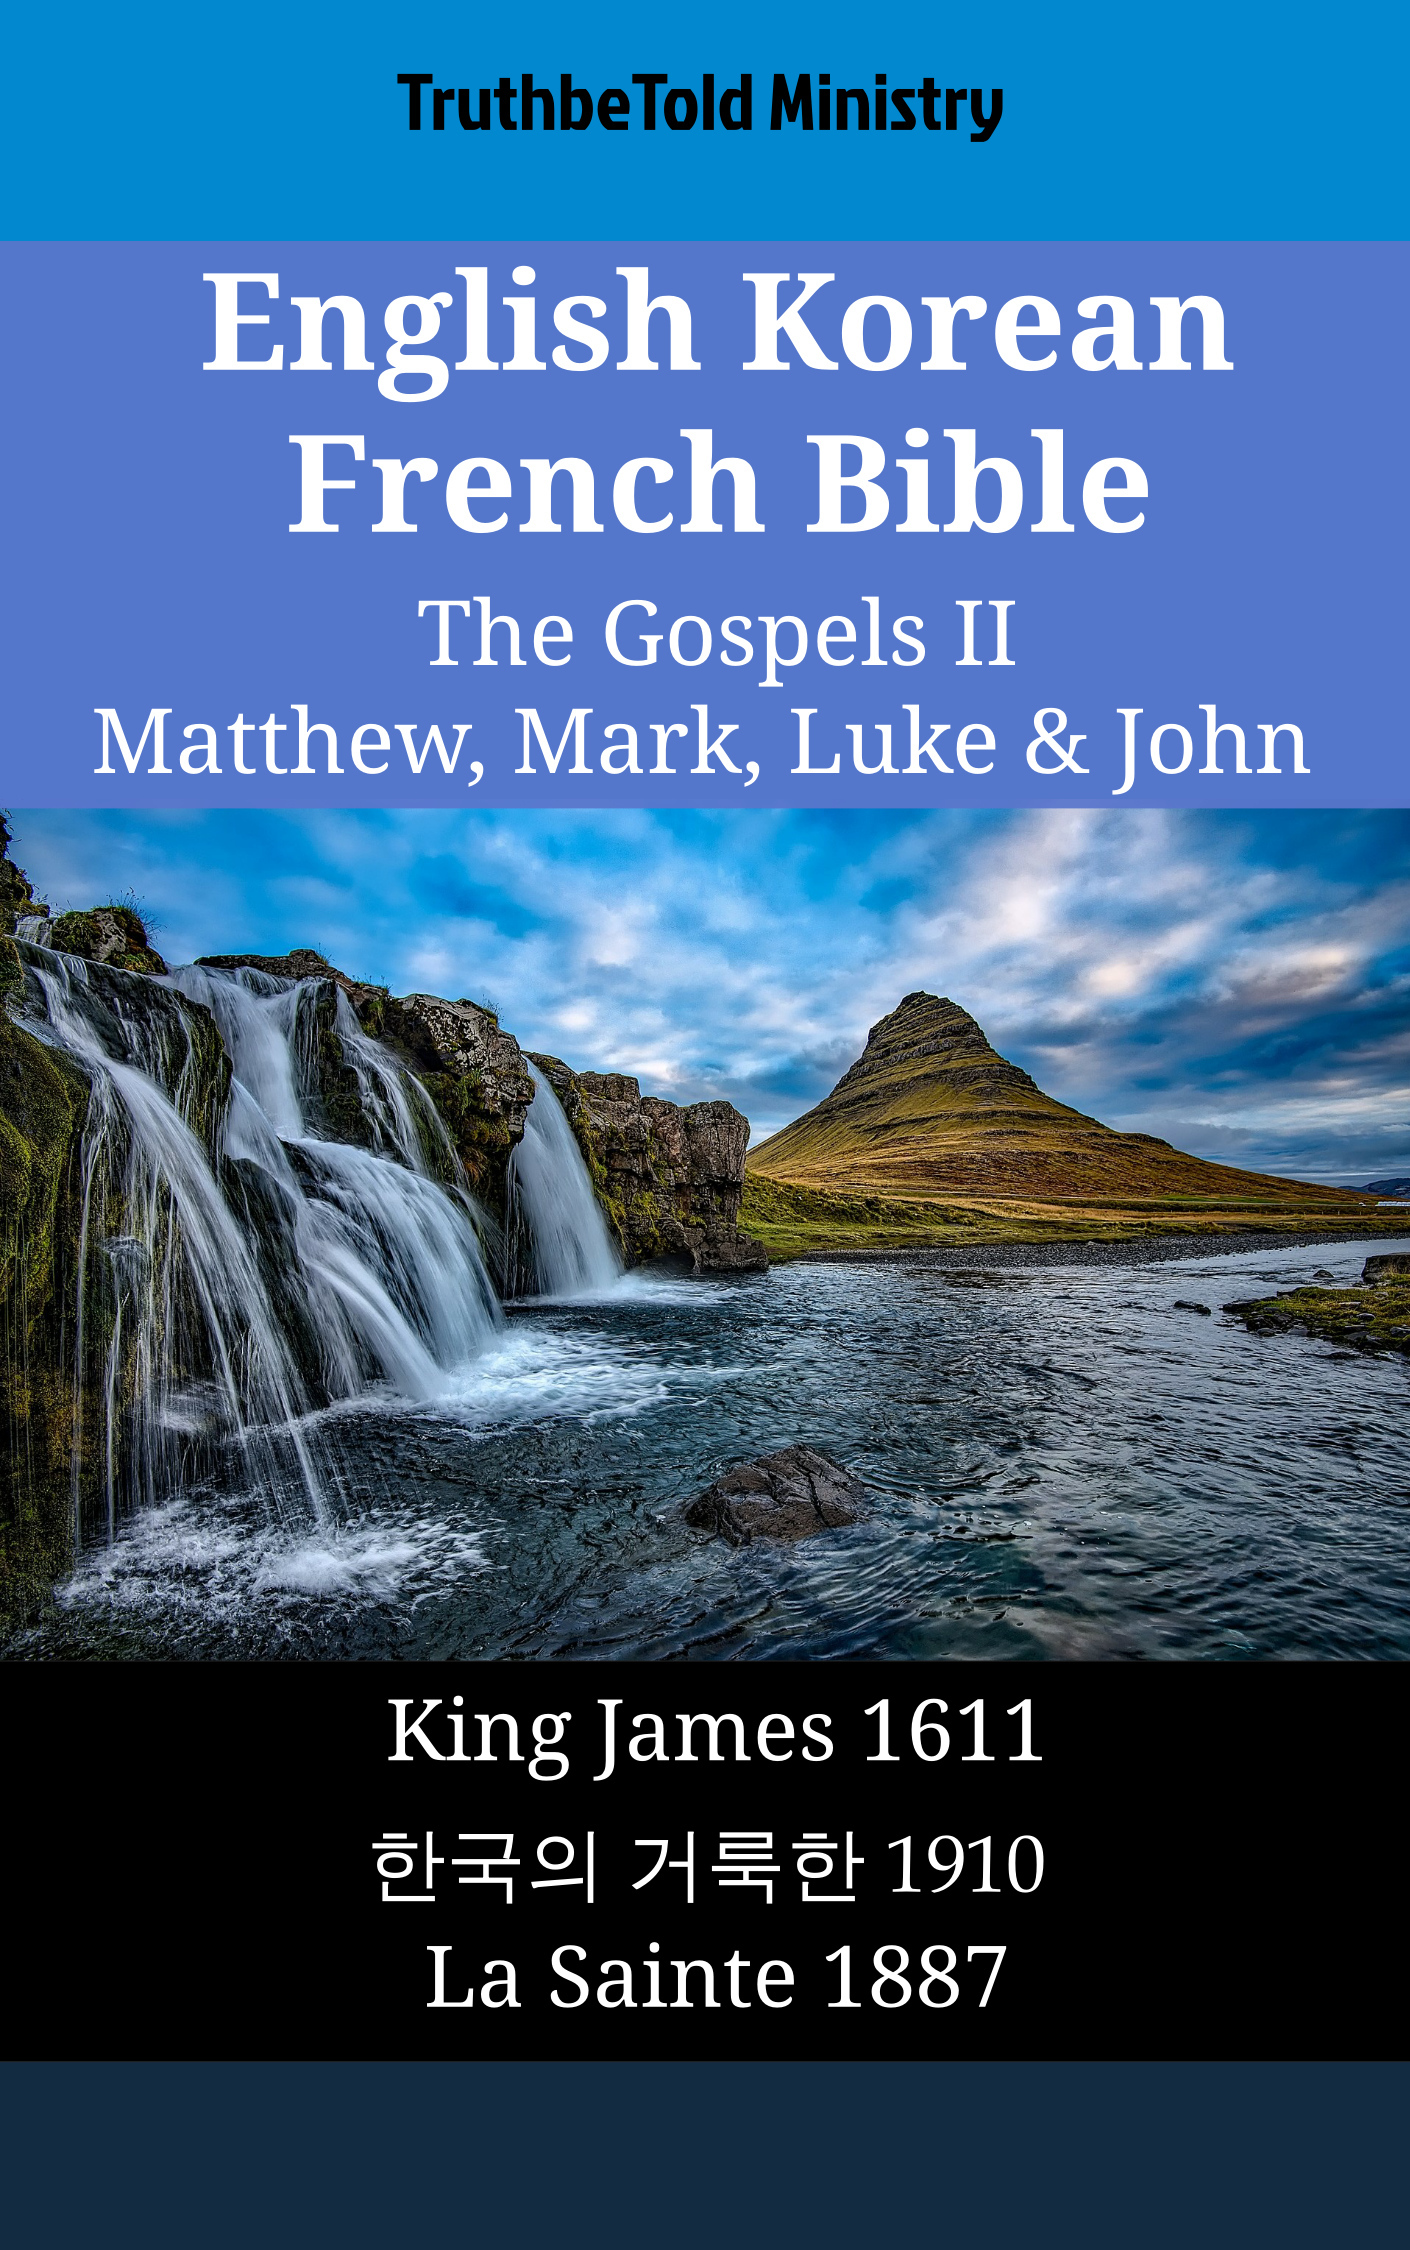 English Korean French Bible - The Gospels II - Matthew, Mark, Luke & John